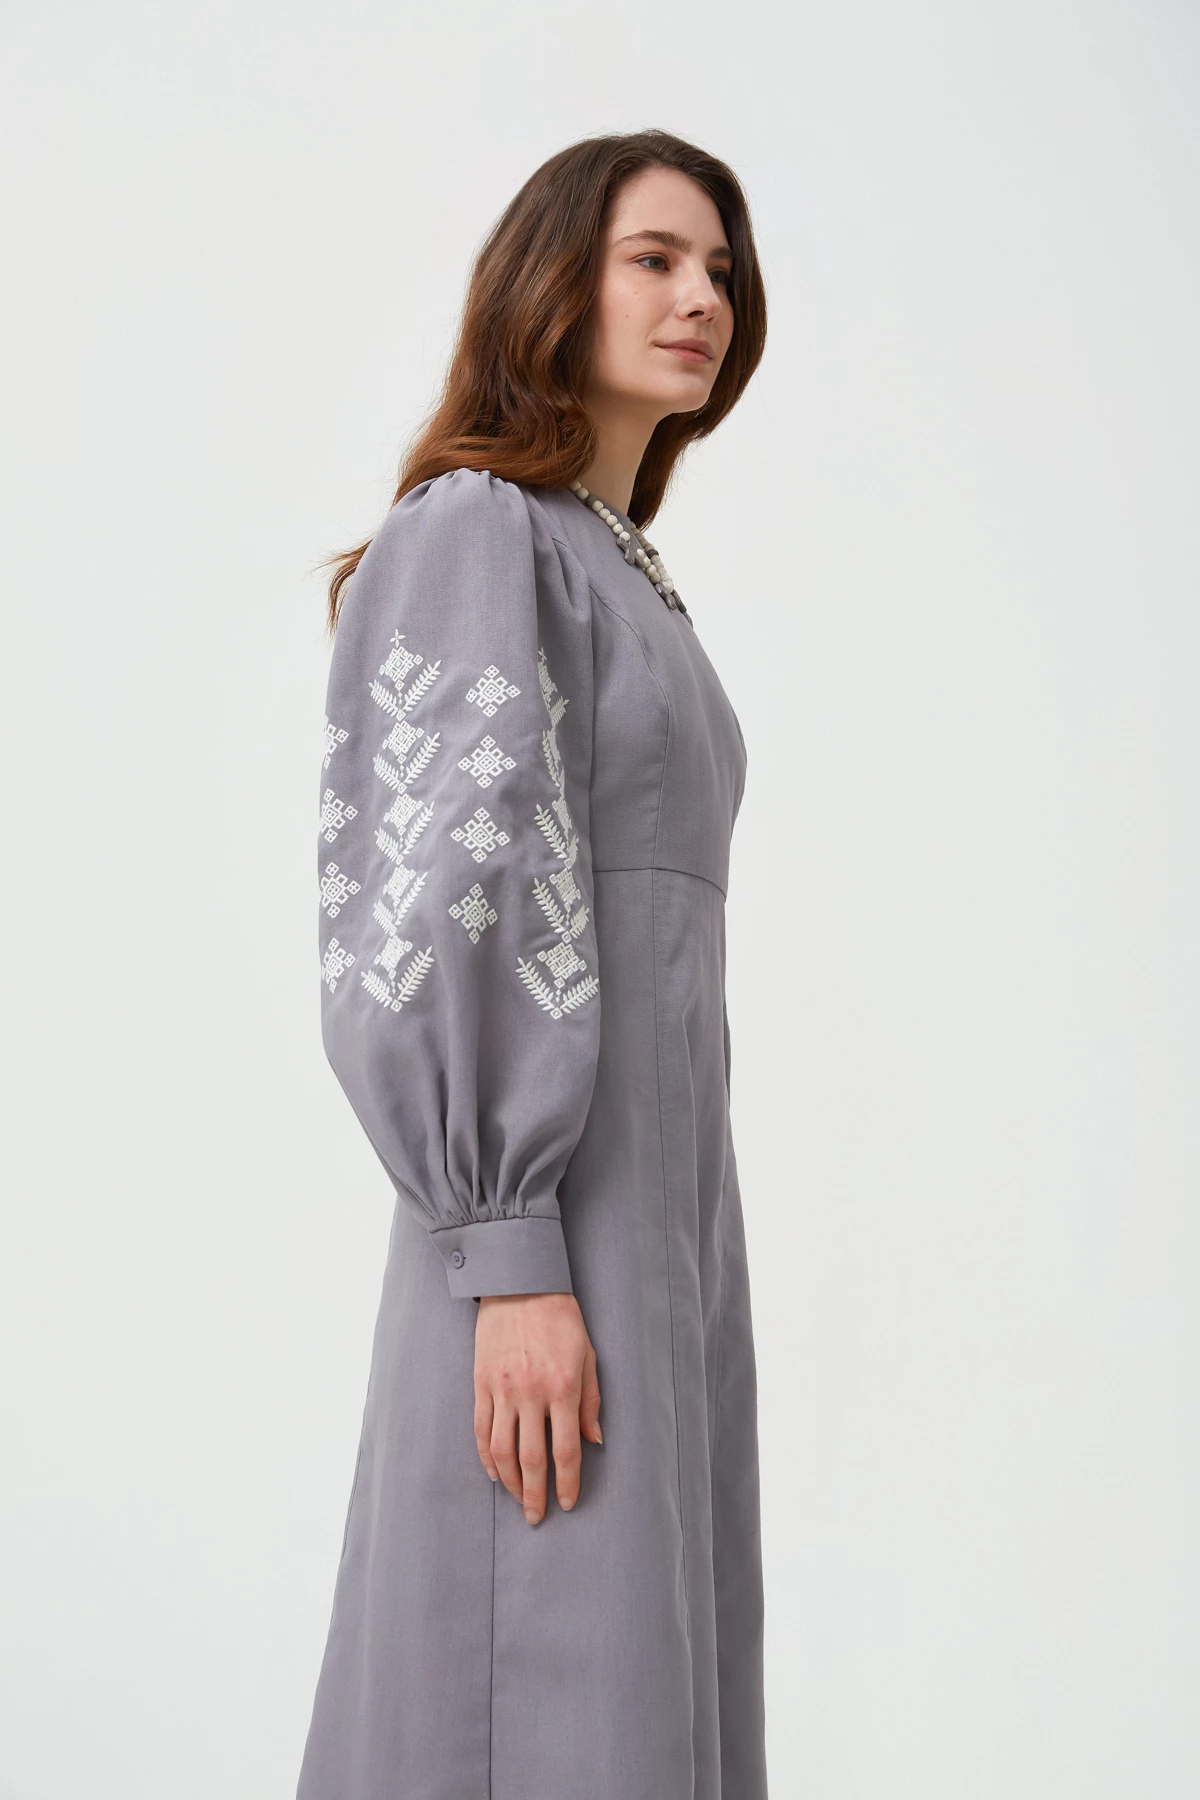 Grey linen vyshyvanka dress with rhombus embroidery, photo 4